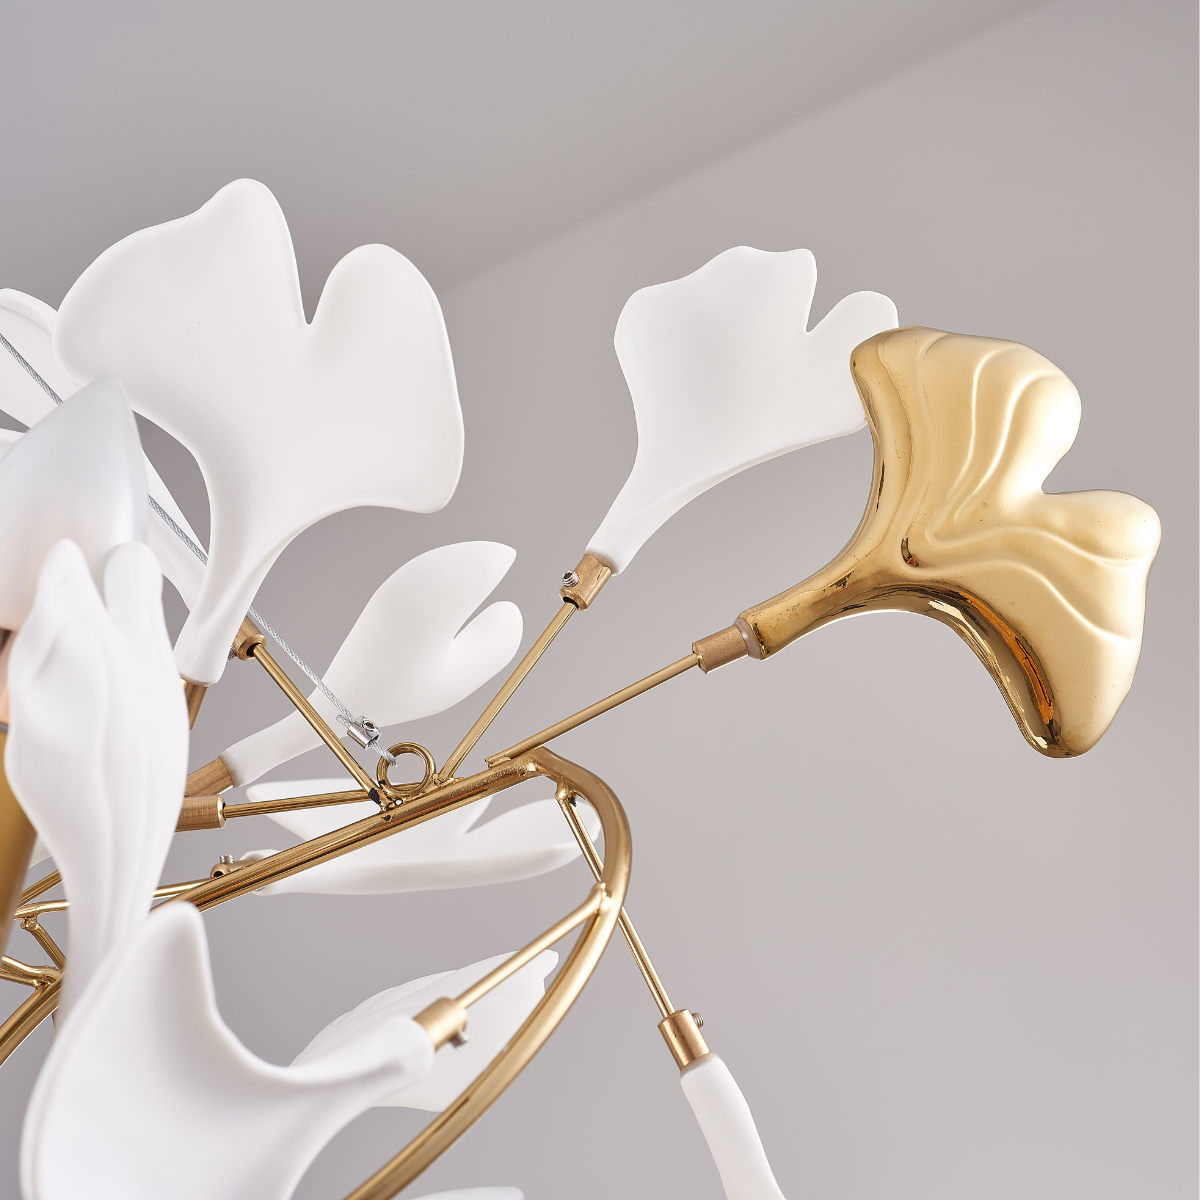 Olivia Gildglow Luxury Ceramic Chandelier Large Foyer Gingko Leaf Living Room